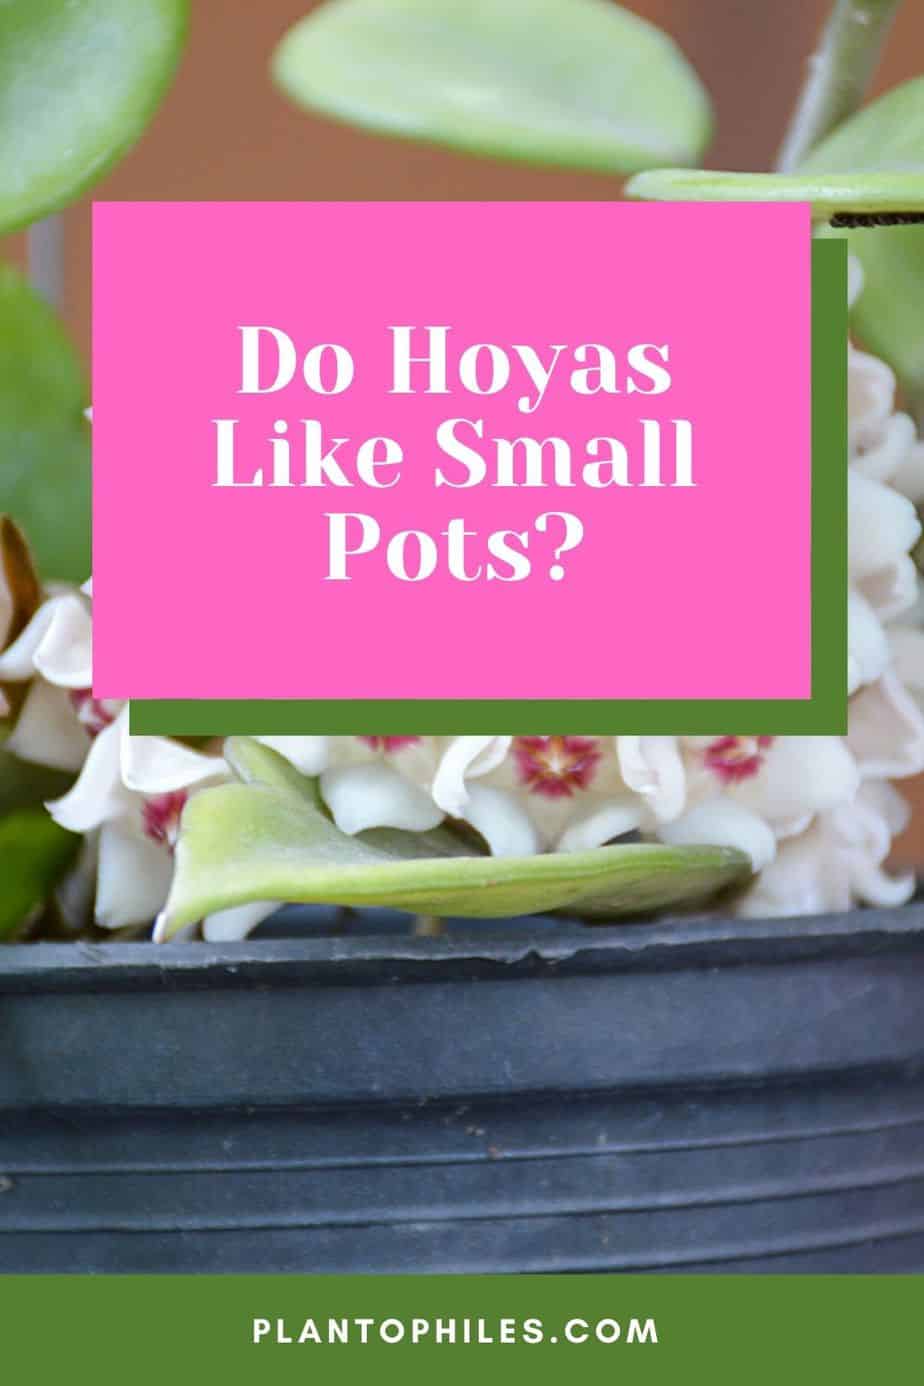 Do Hoyas Like Small Pots?